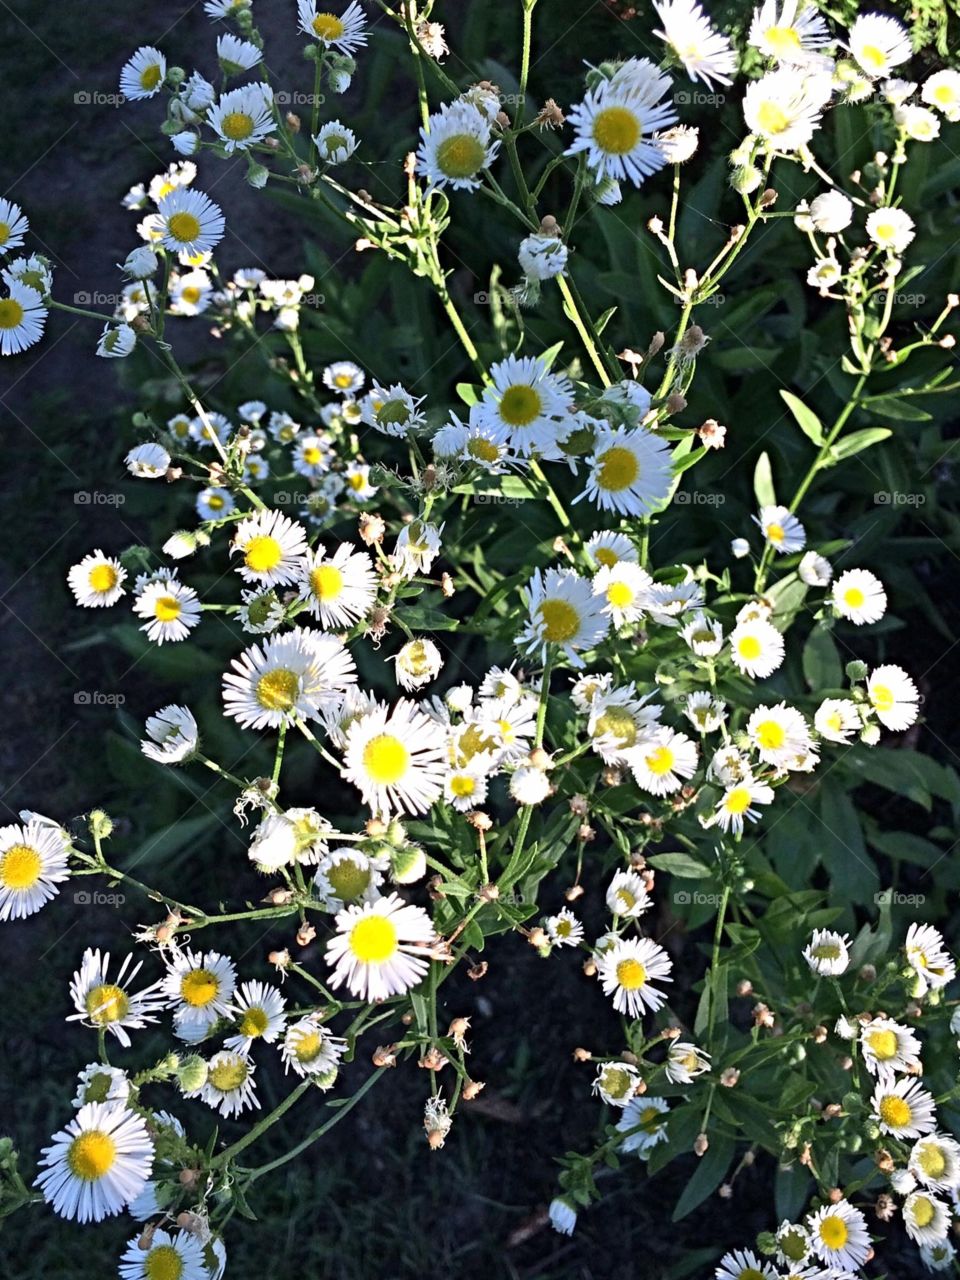 Miniature daisies 